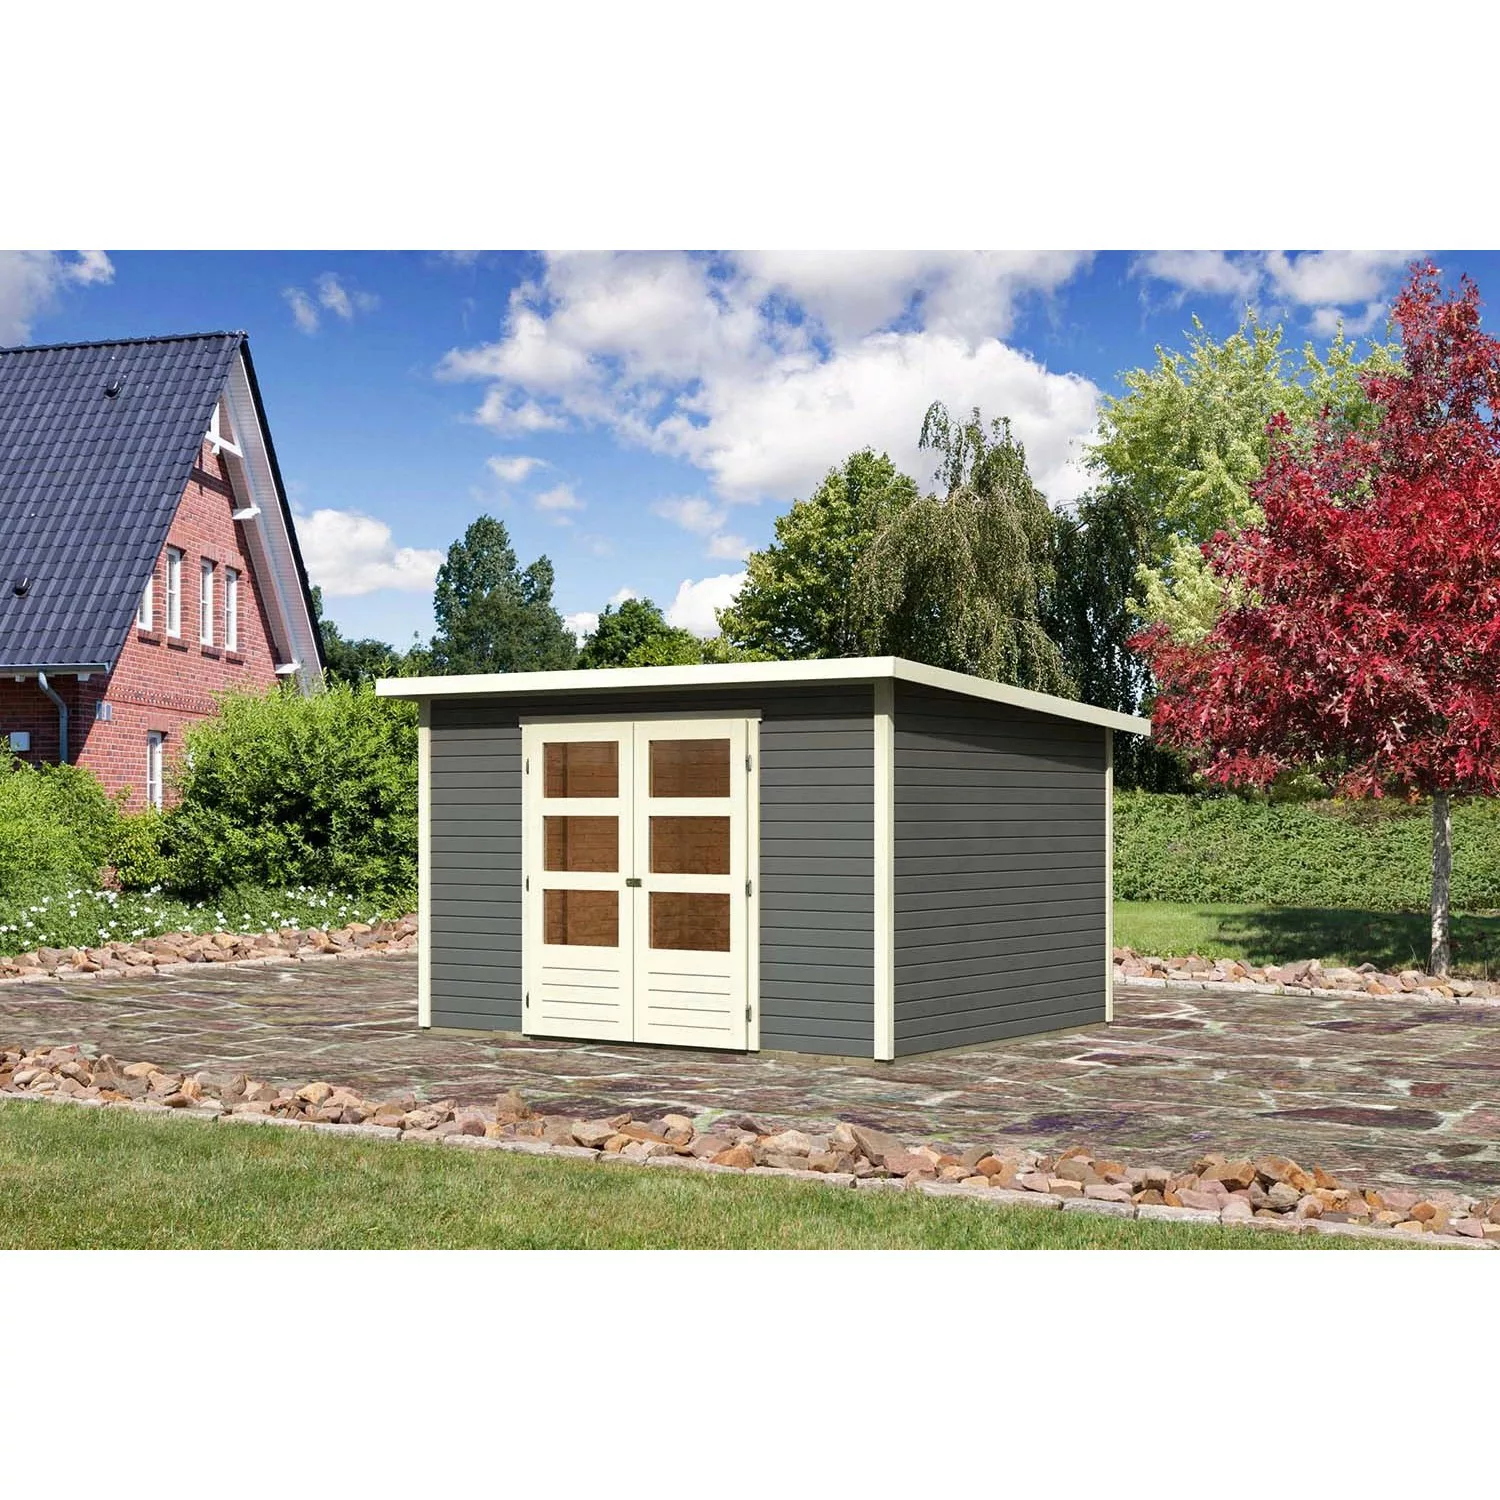 Karibu Holz-Gartenhaus Stockach Terragrau Pultdach Lackiert 301 cm x 242 cm günstig online kaufen